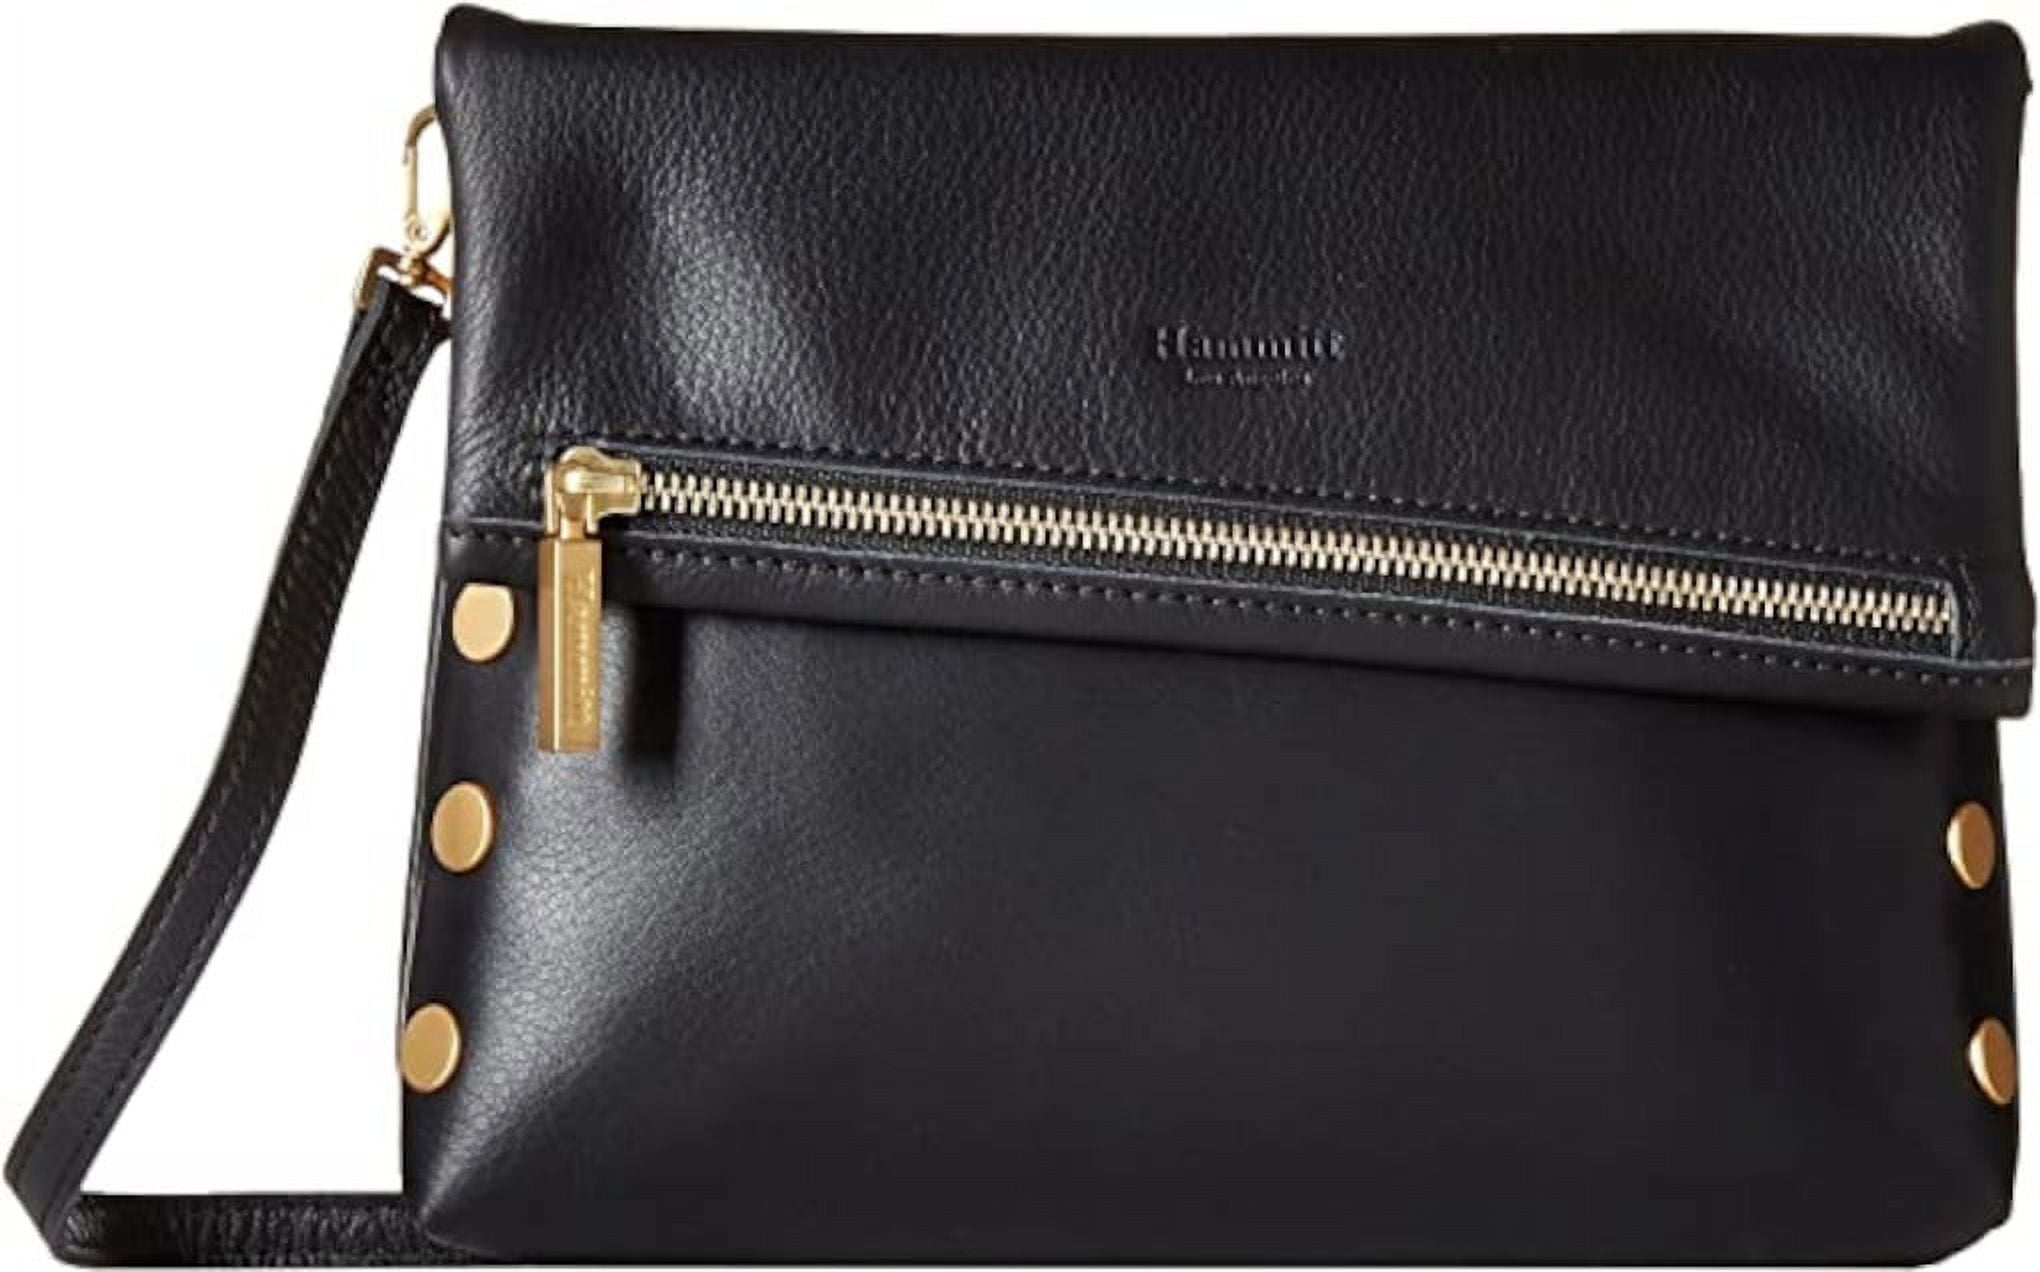 Hammitt Women's VIP Medium Leather Purse With Strap Black/Brushed